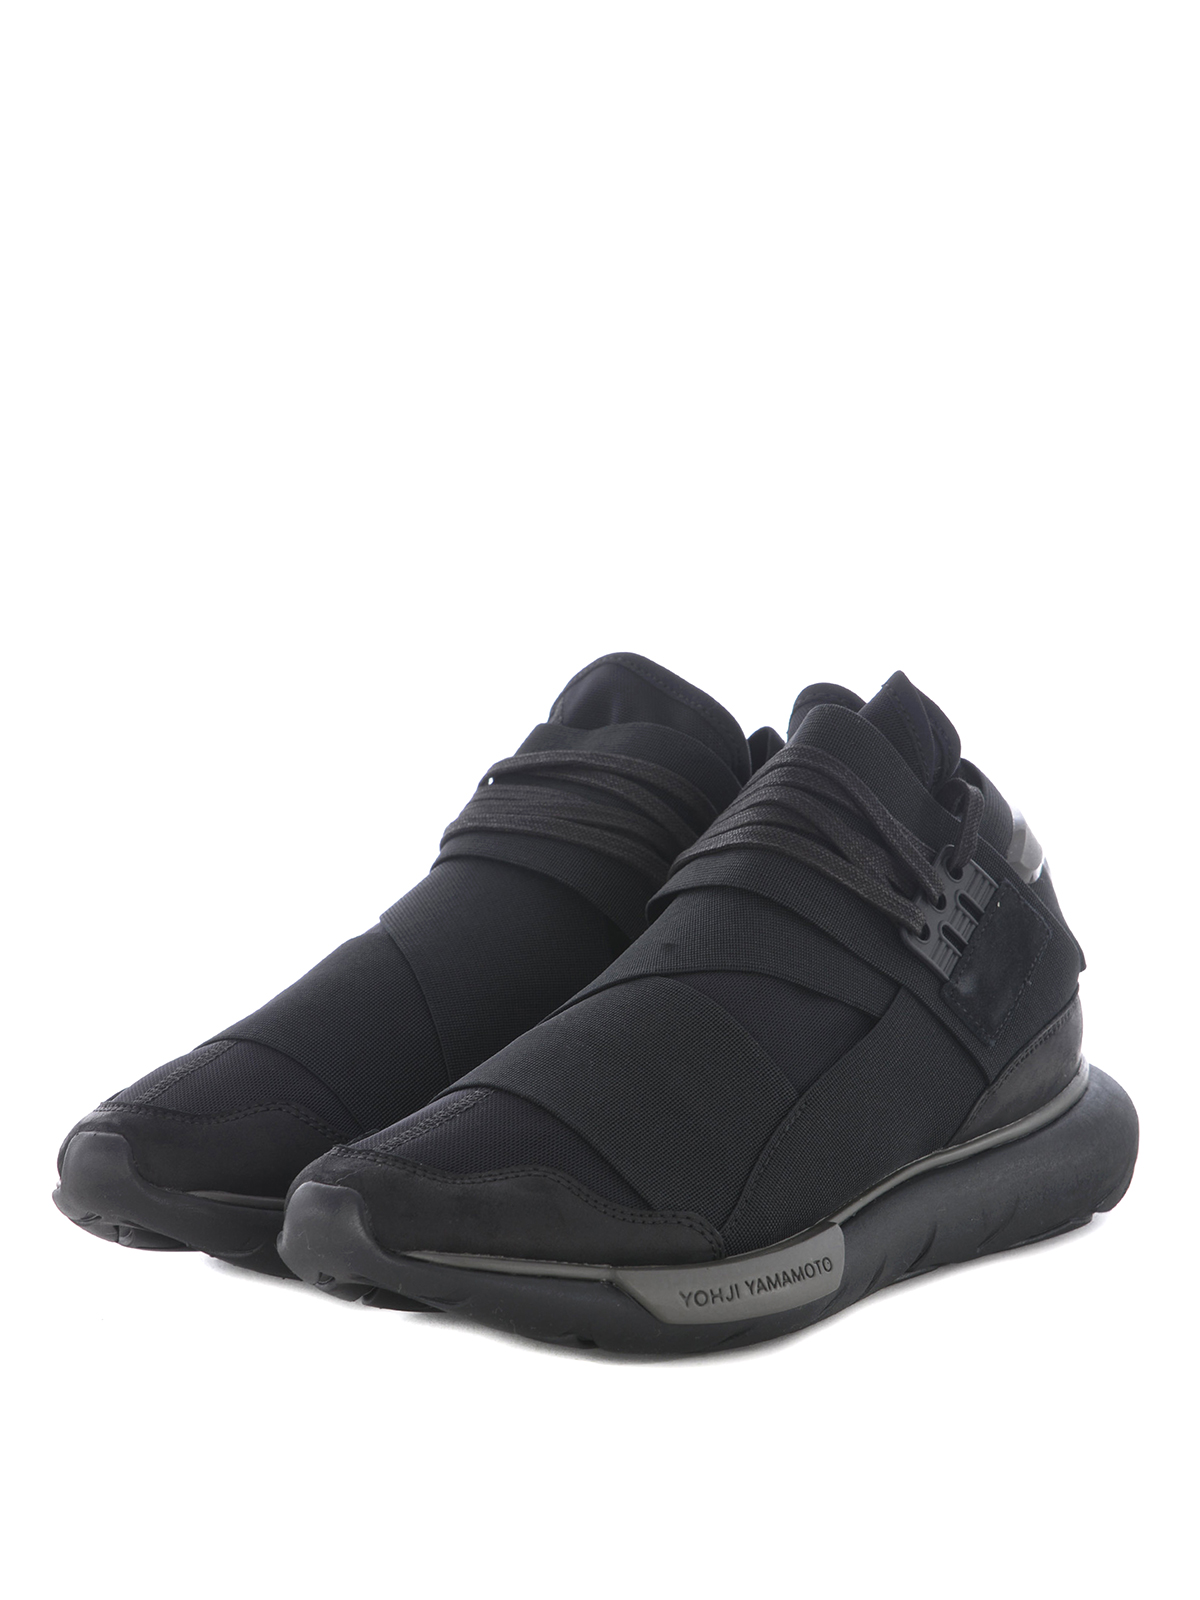 Adidas Y-3 High elastic bands sneakers -